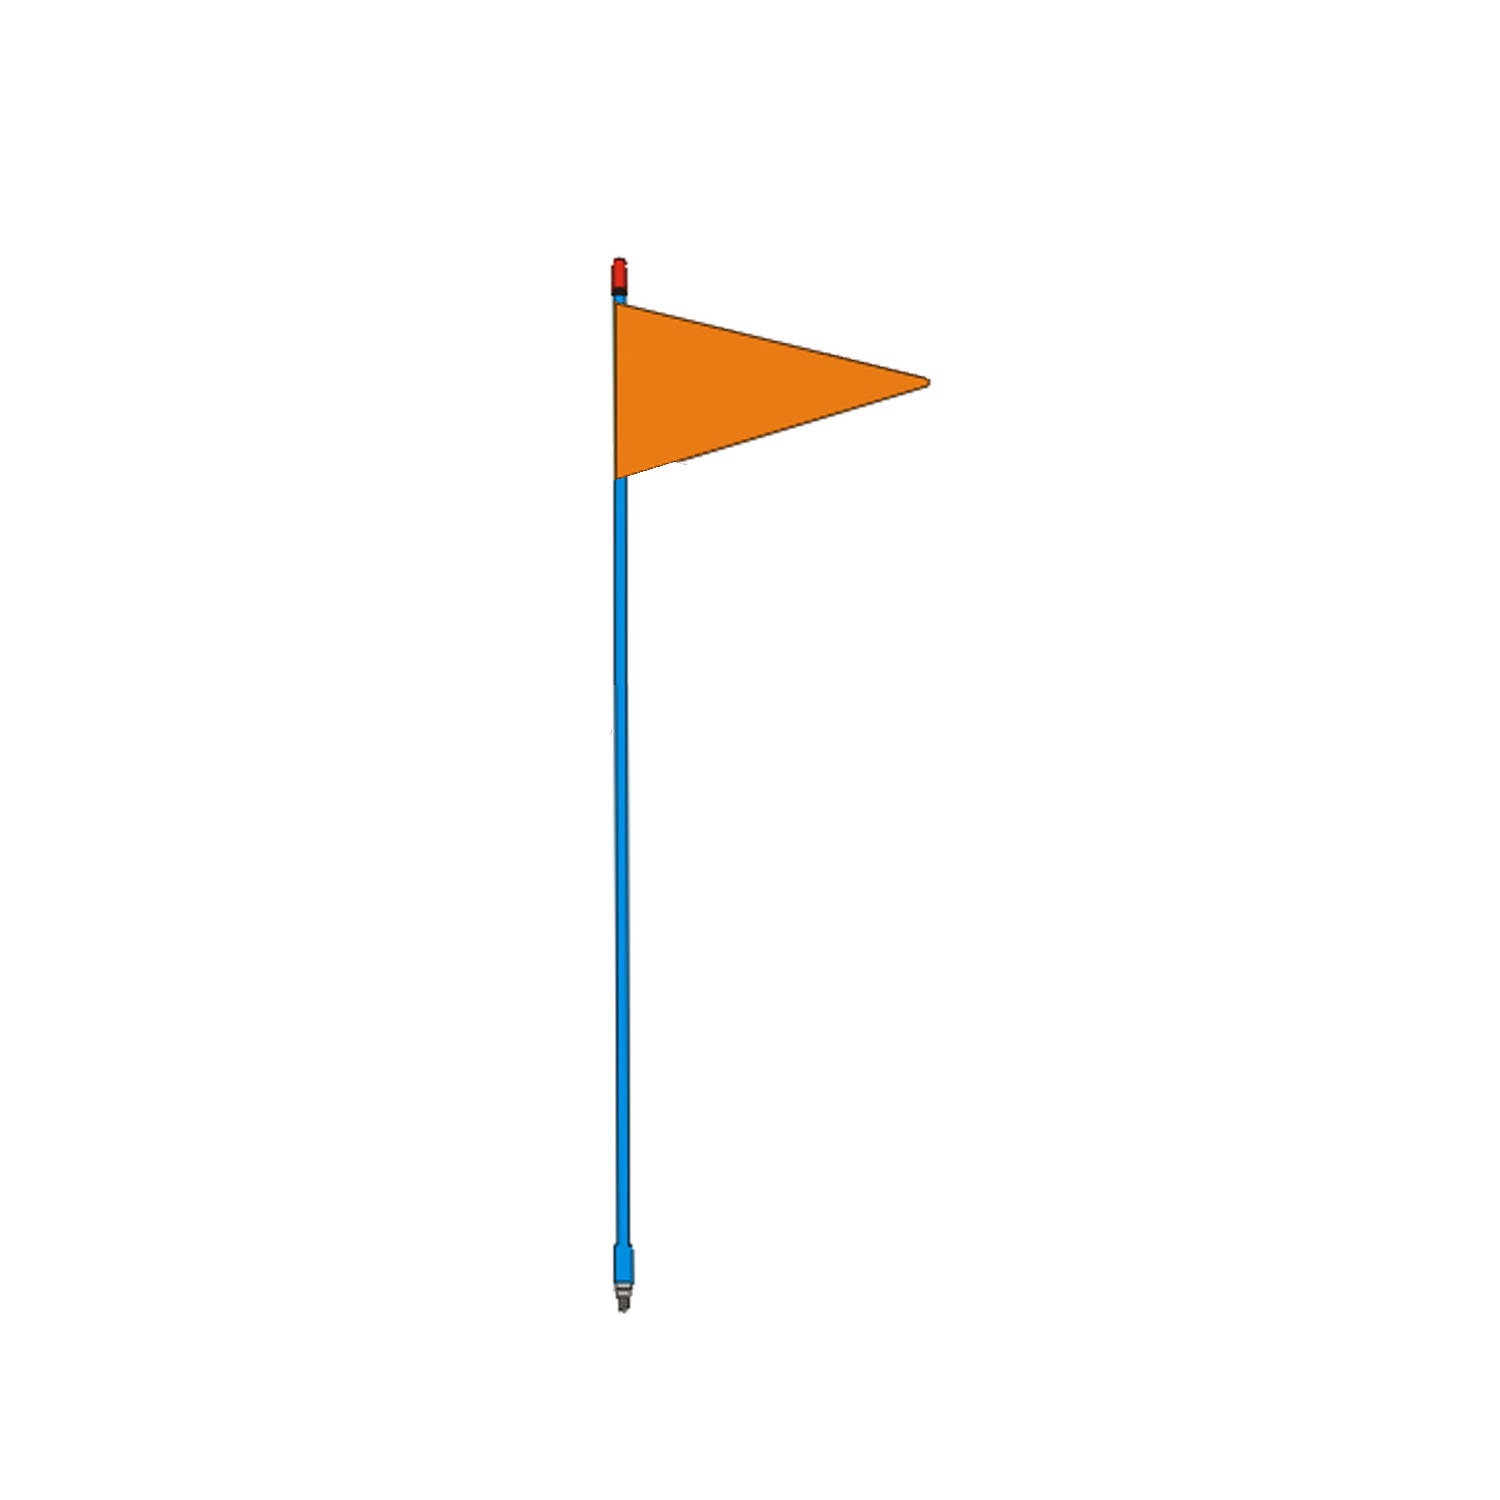 FIRESTIK - F4-BL 4 FOOT BLUE FLAGSTICK WITH ORANGE TRIANGULAR SAFETY FLAG - STANDARD 3/8"-24 BASE THREADS